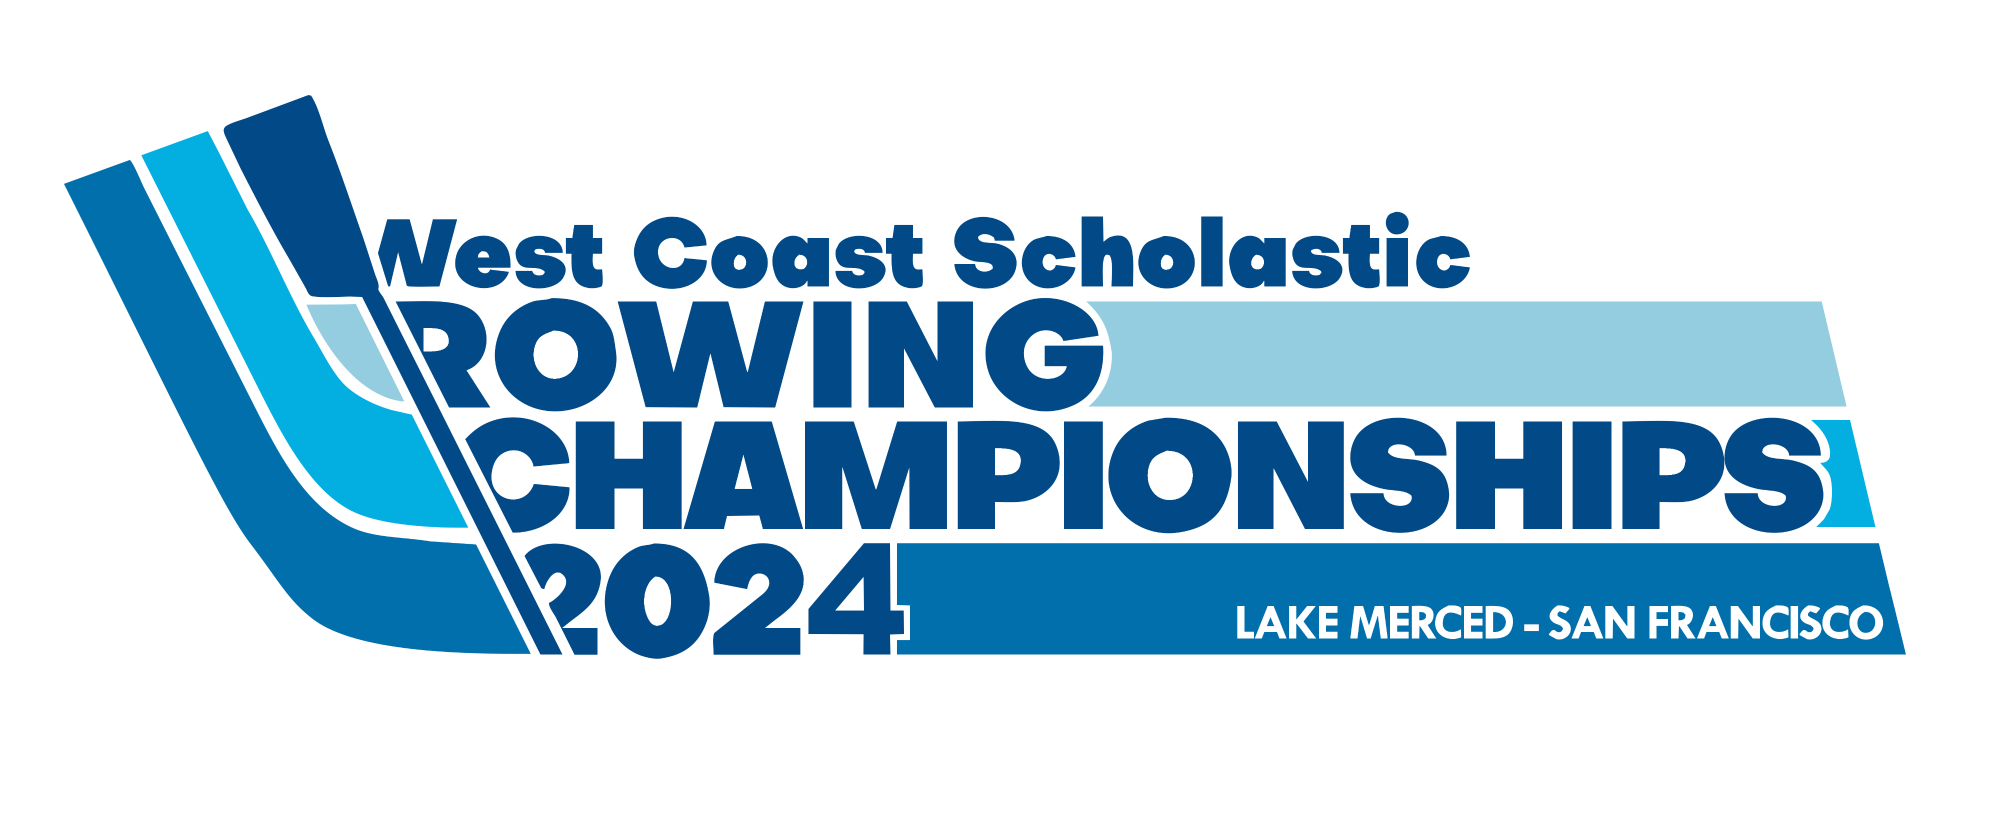 west coast scholastic 2024 logo, horizontal lines with oar